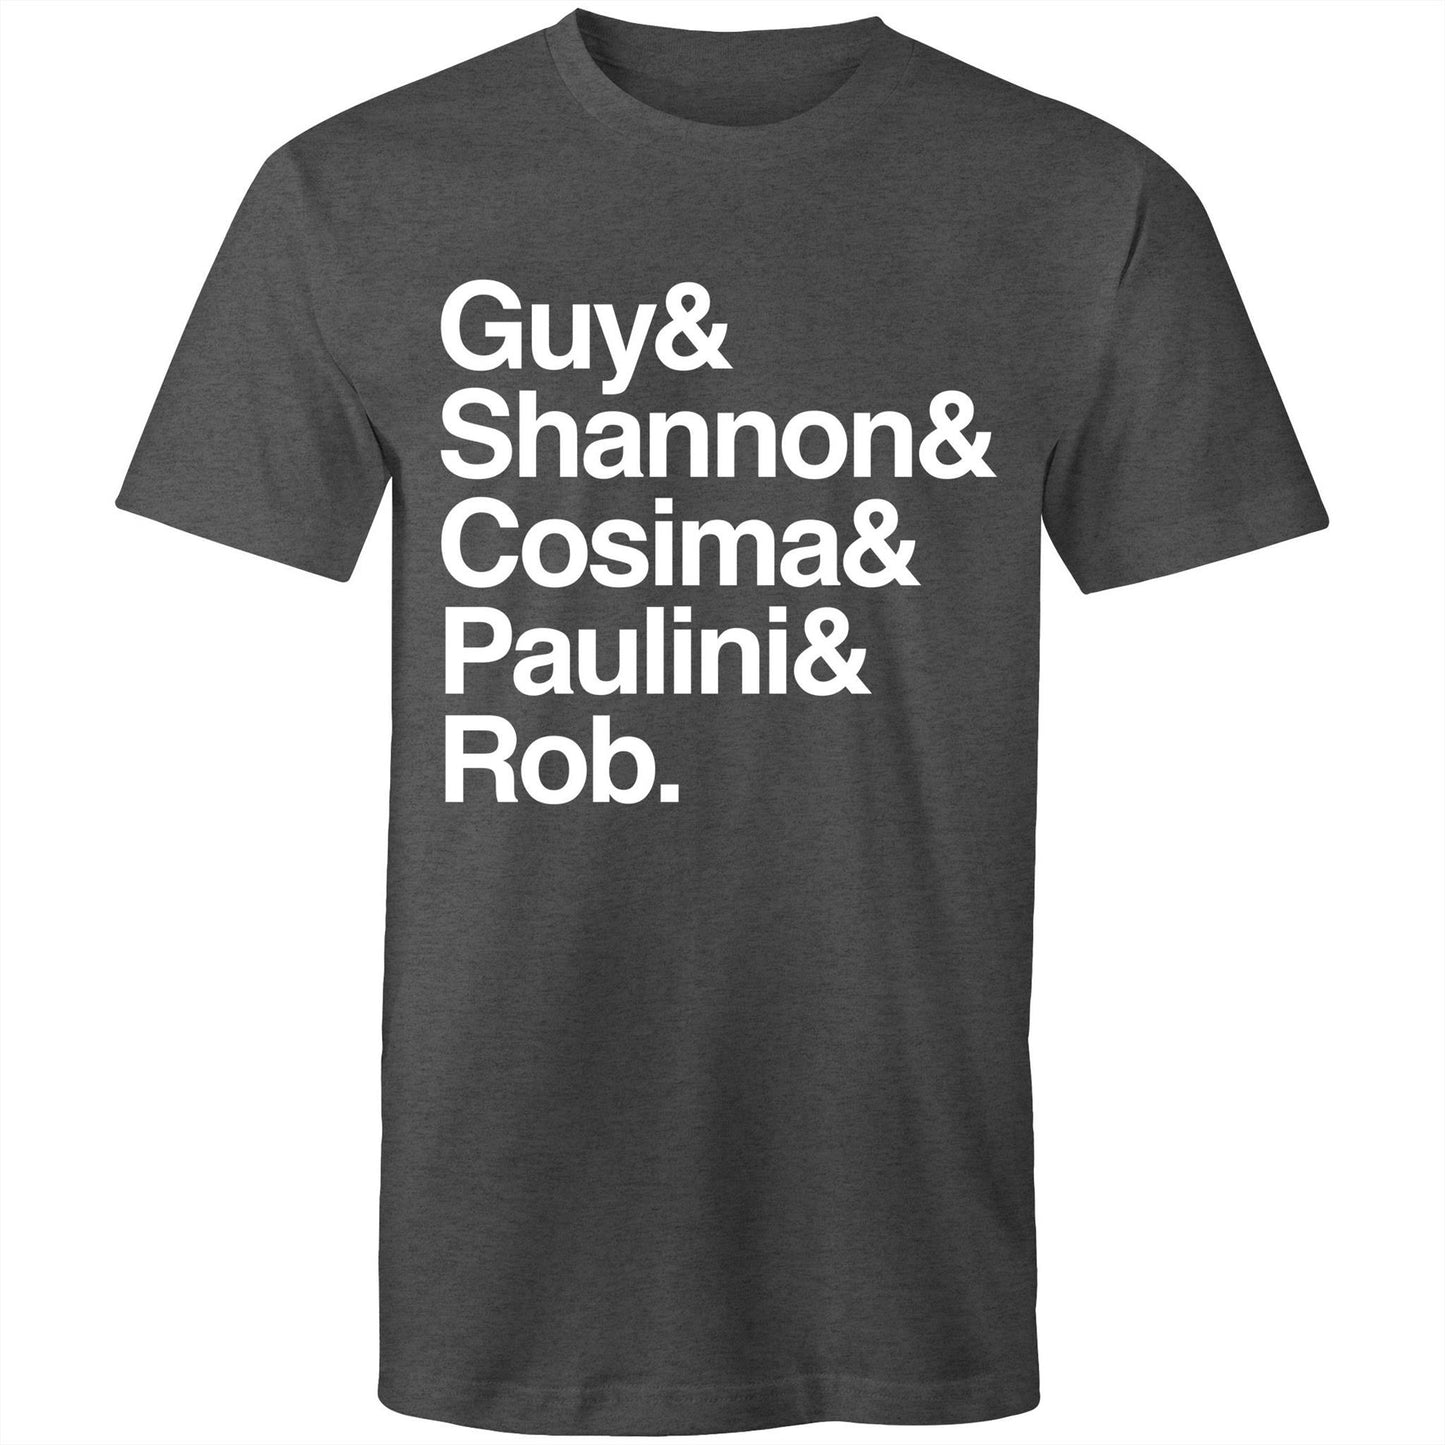 AUSTRALIAN IDOL - Men's T-Shirt